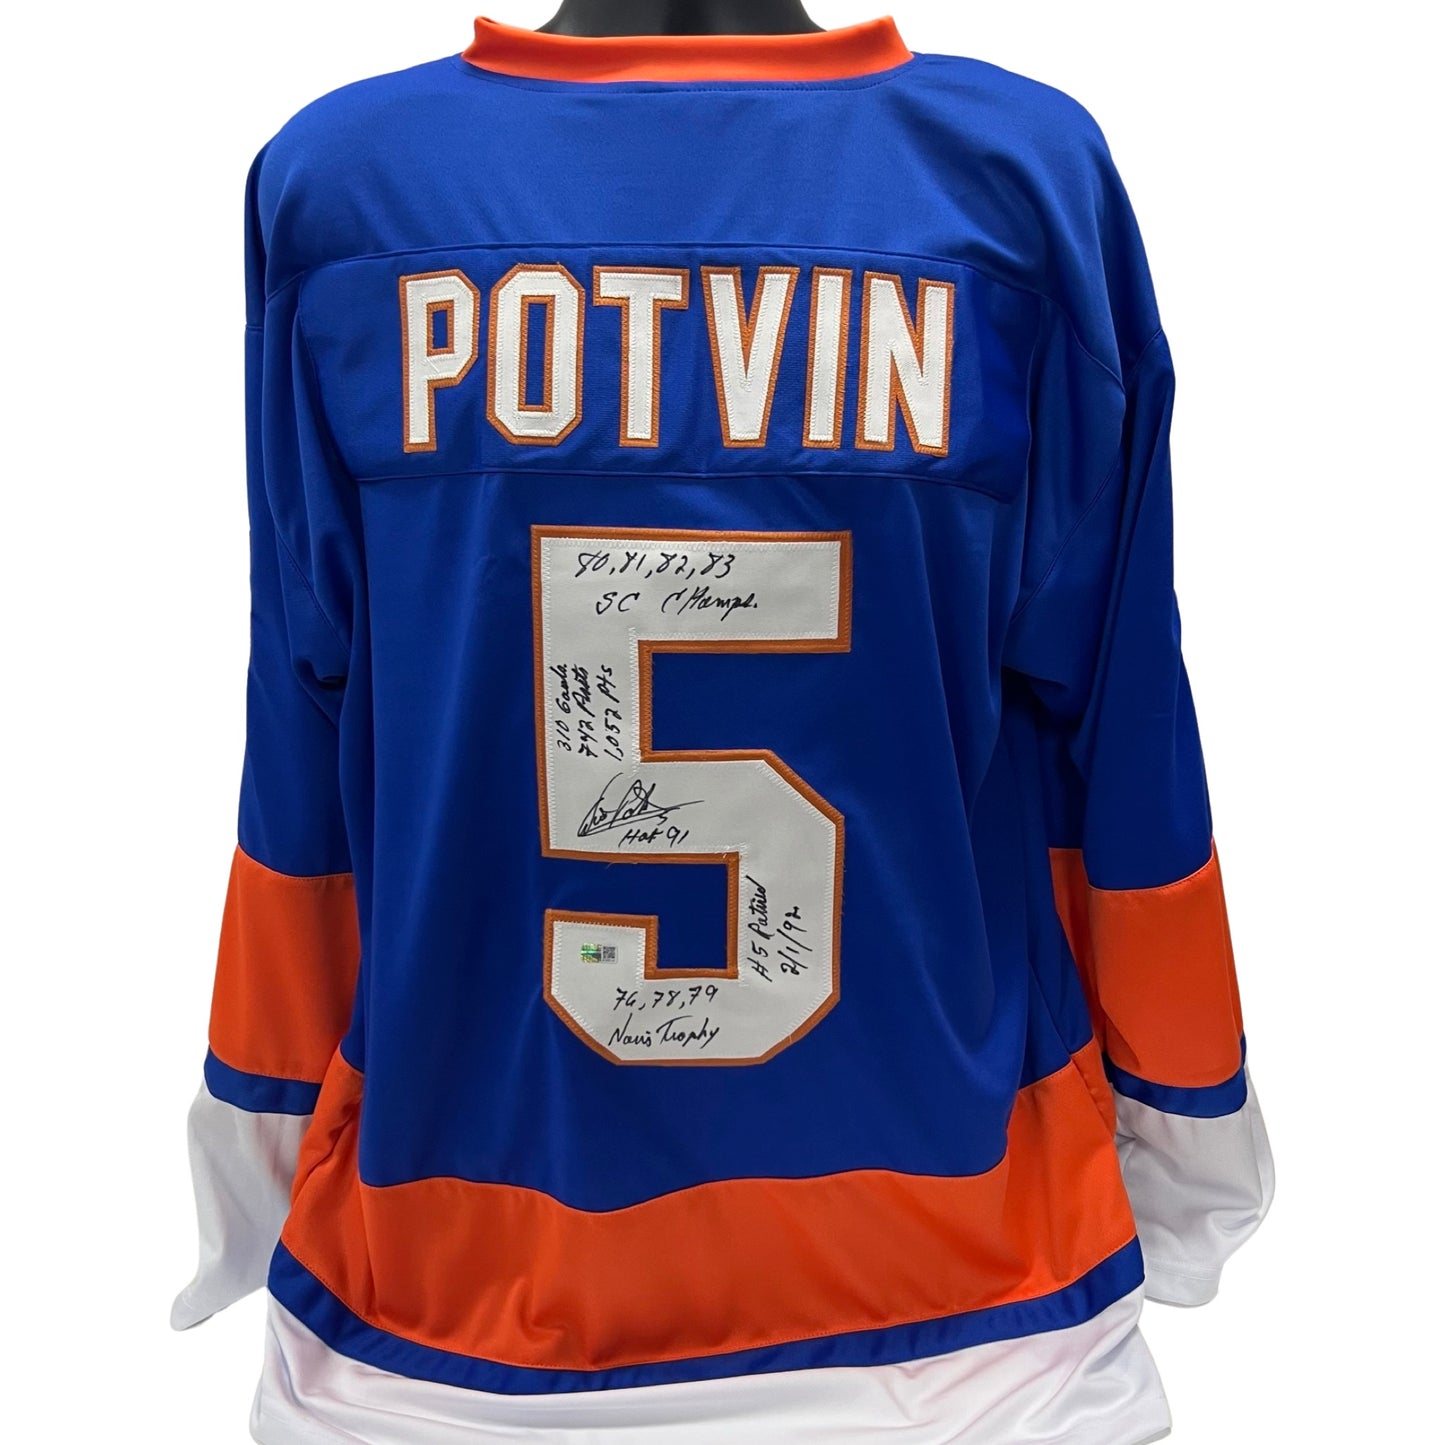 Denis Potvin Autographed New York Islanders Blue Jersey "80 81 82 83 S.C Champs, 310 Goals, 712 Assists, 1052 Points, HOF 1991, #5 Retired 2/1/92, 76, 78, 79 Norris Trophy" Steiner CX